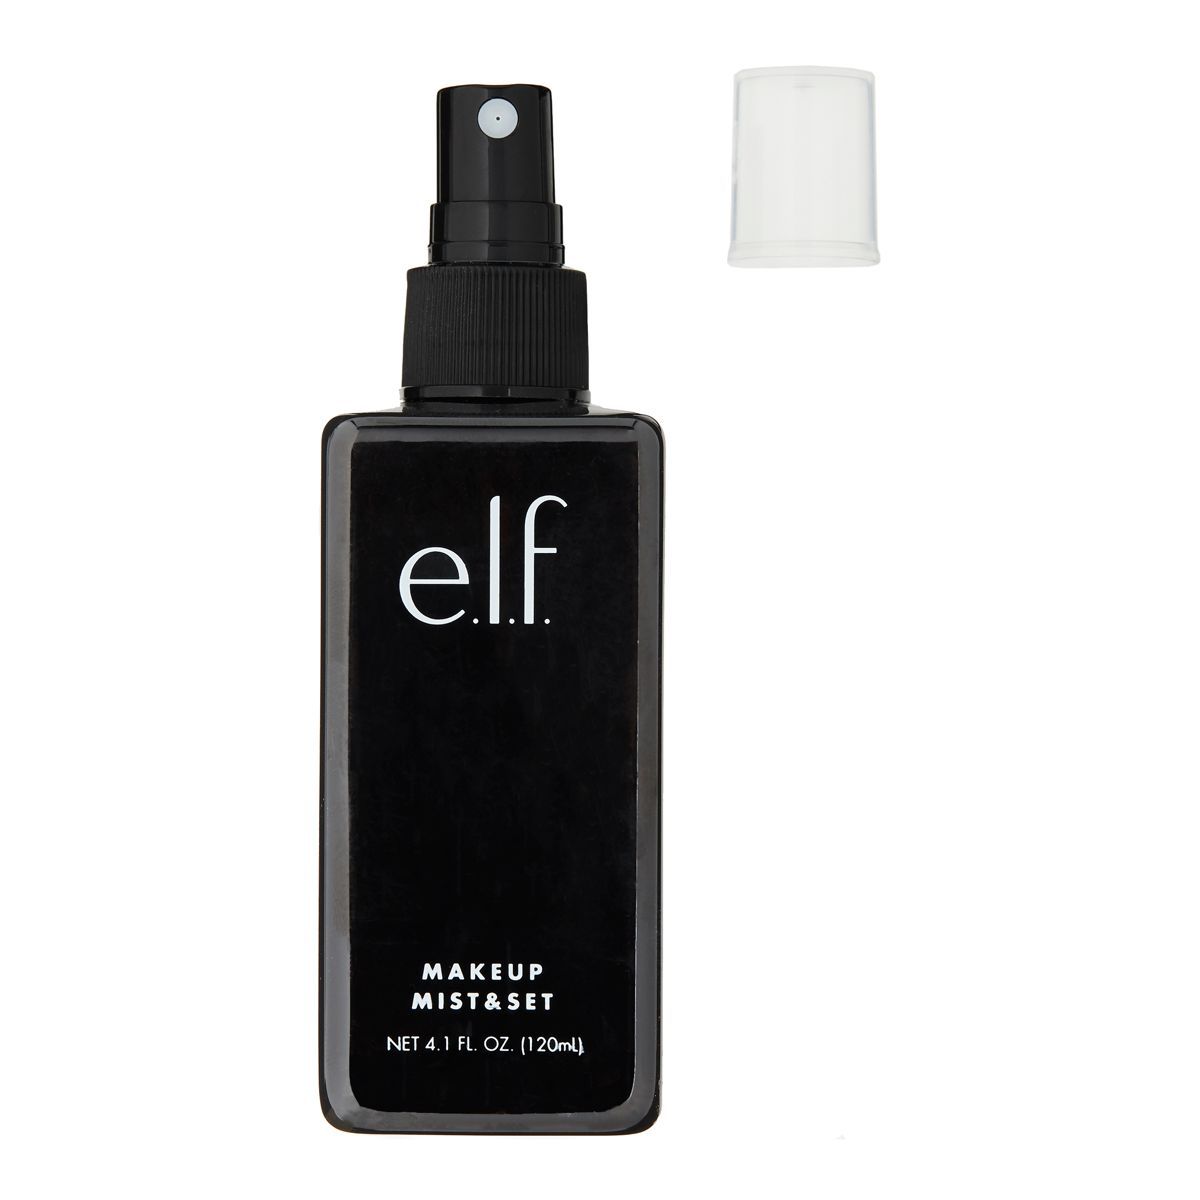 e.l.f. Makeup Mist & Set Large - 4.1 fl oz | Target